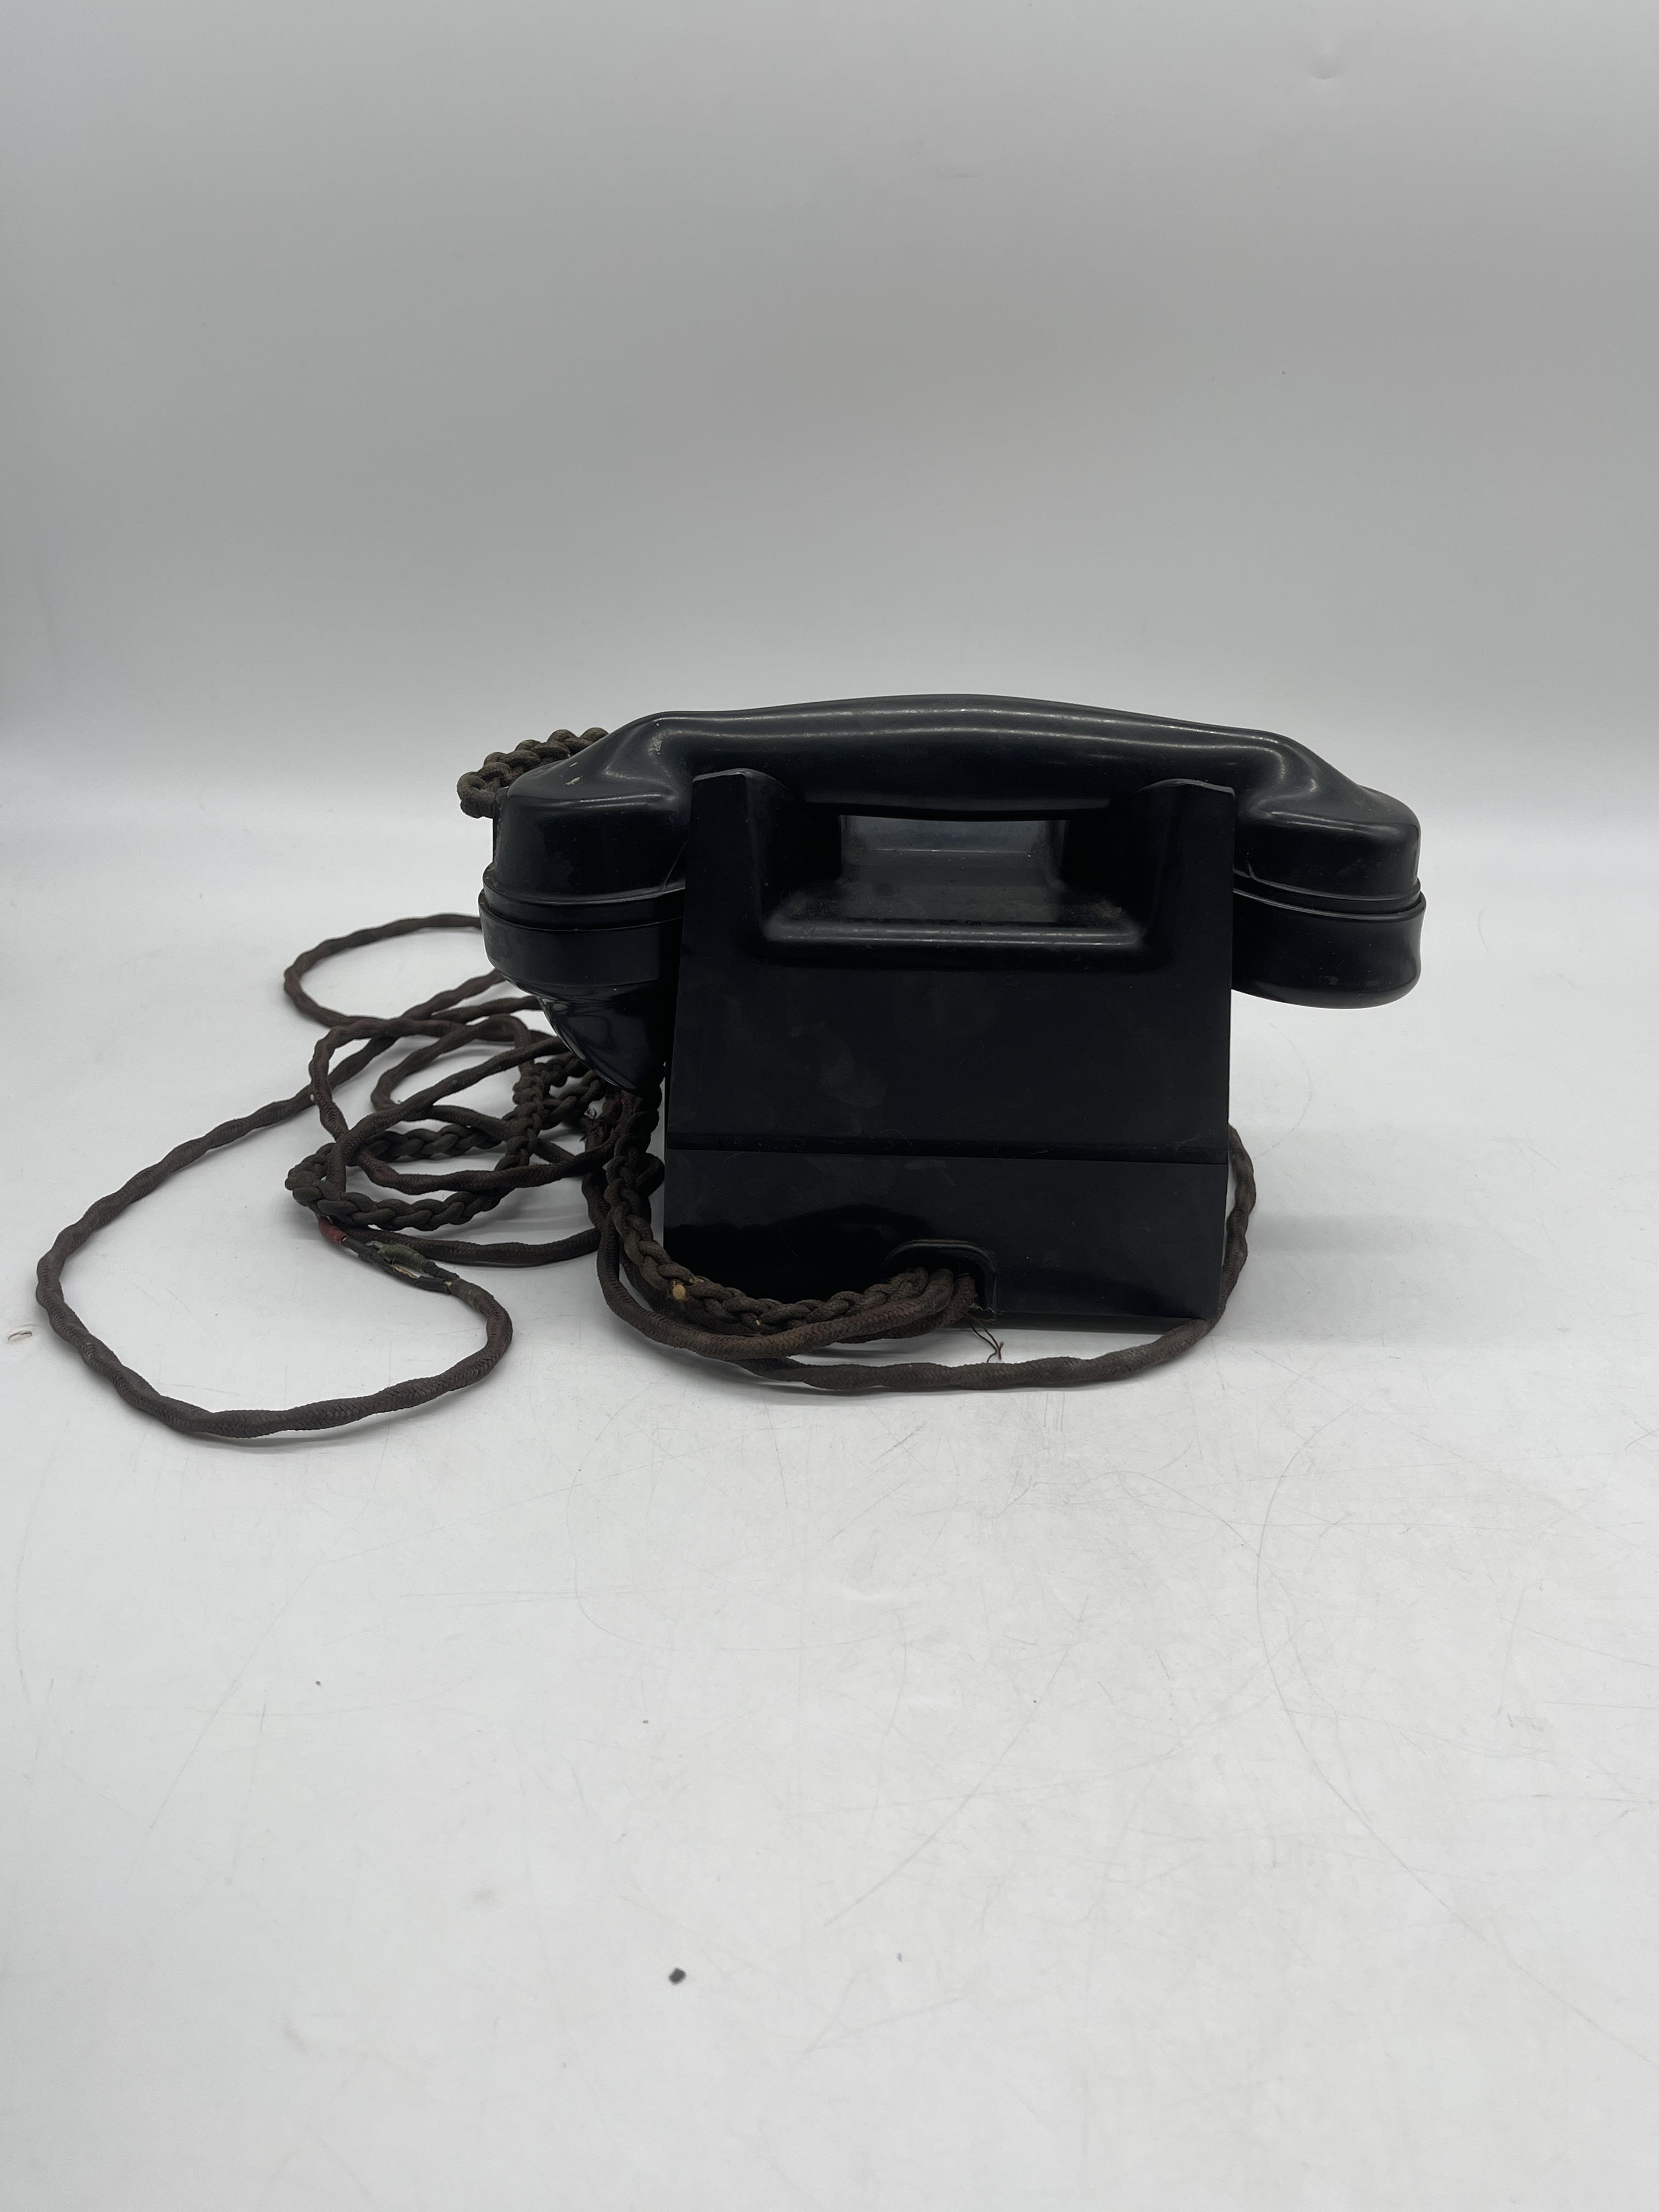 Two Bakelite telephones - Image 5 of 20